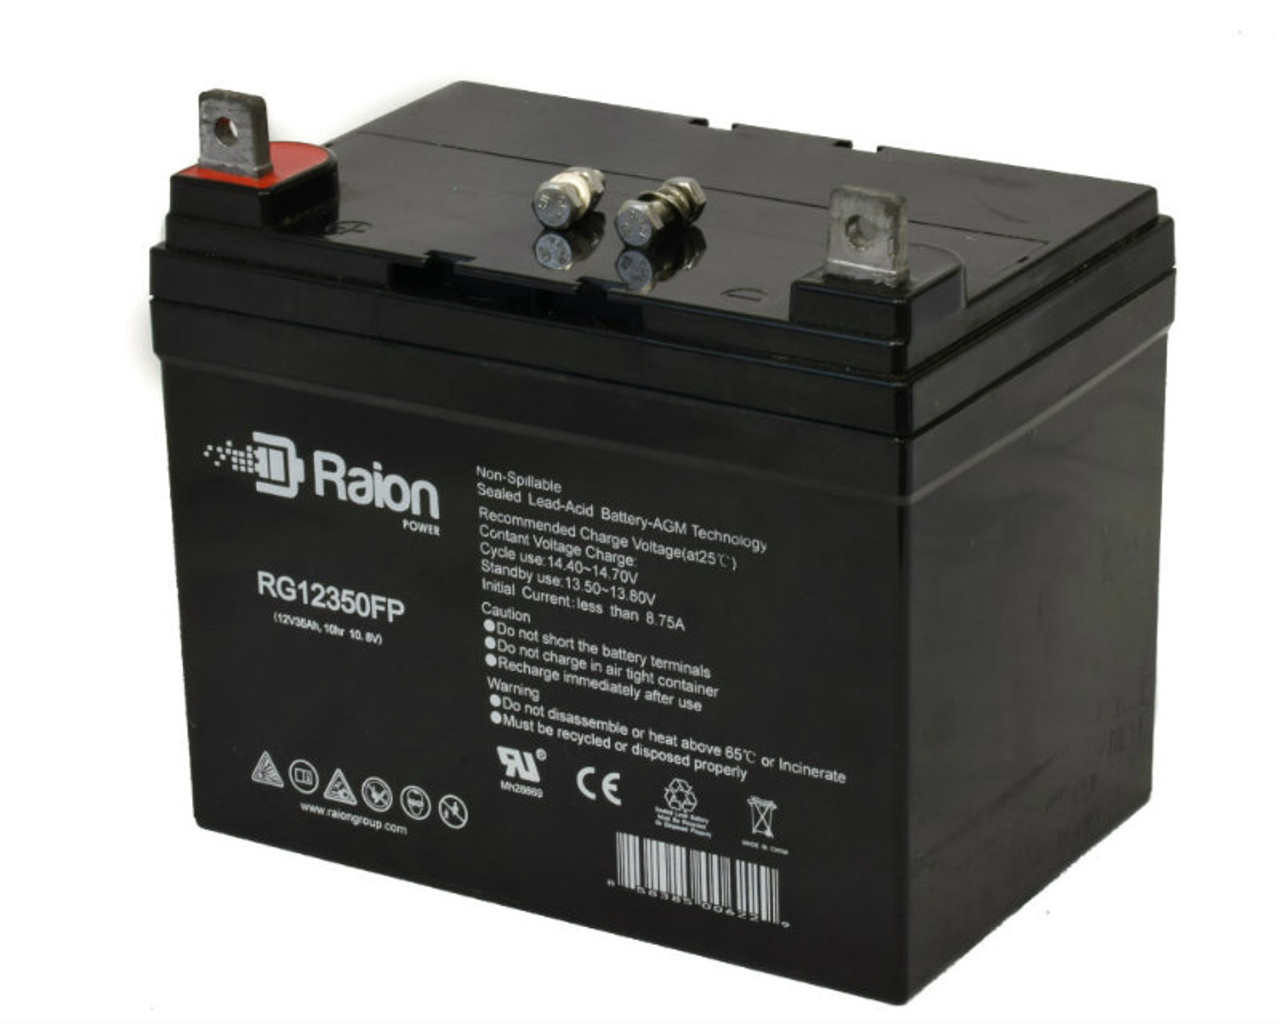 Raion Power Replacement 12V 35Ah Battery for Ingersol Equipment 5320V - 1 Pack